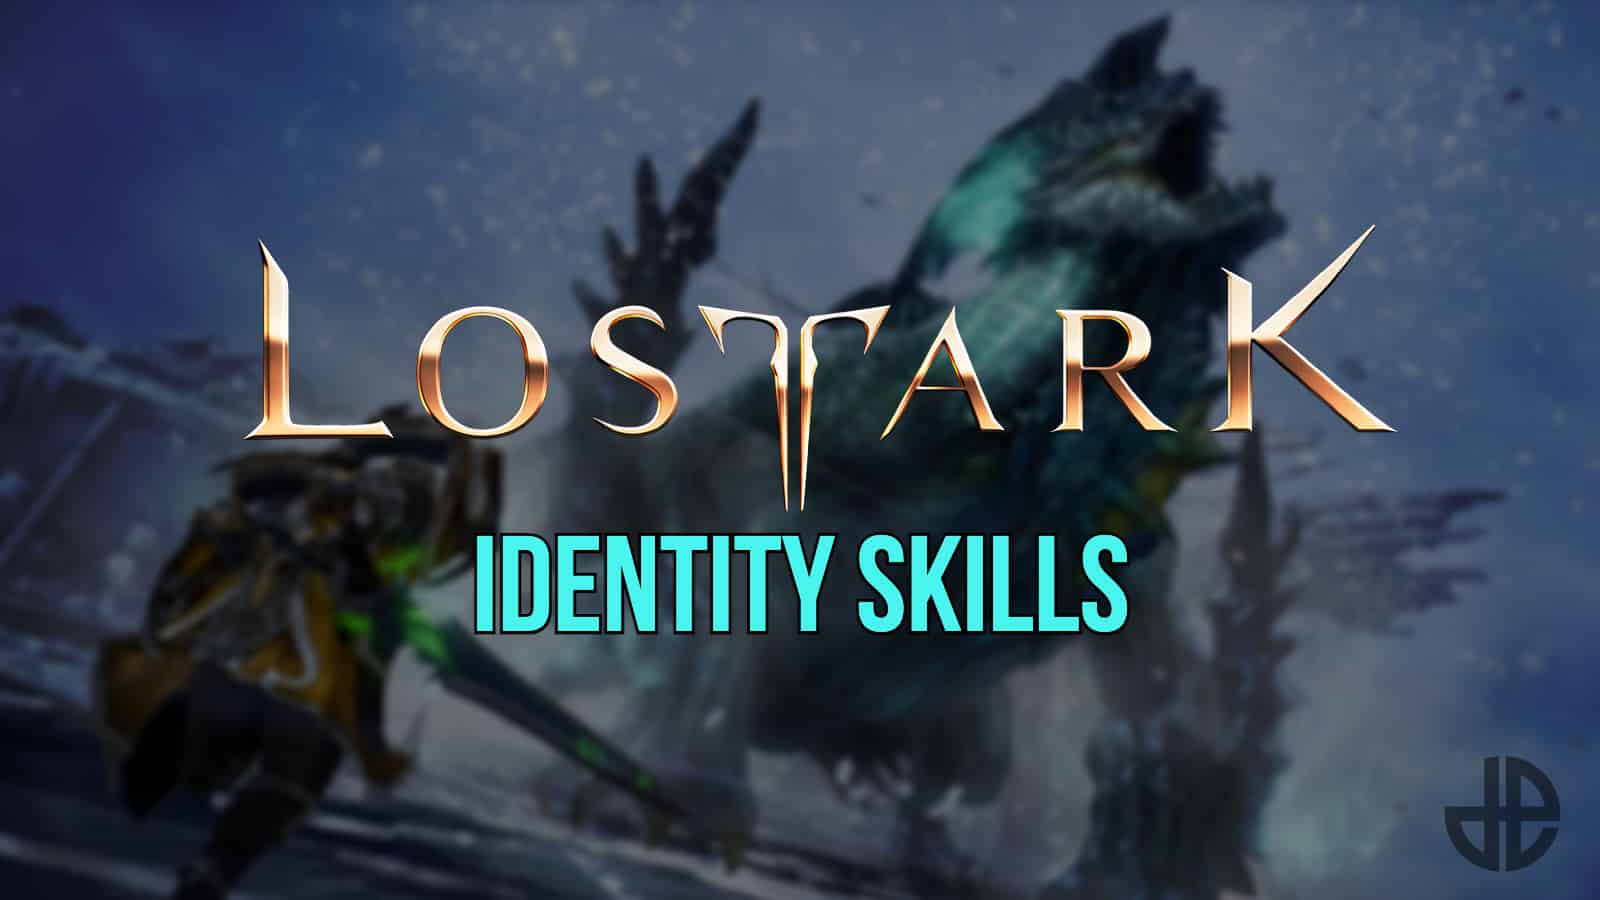 lost ark identity skills guide image